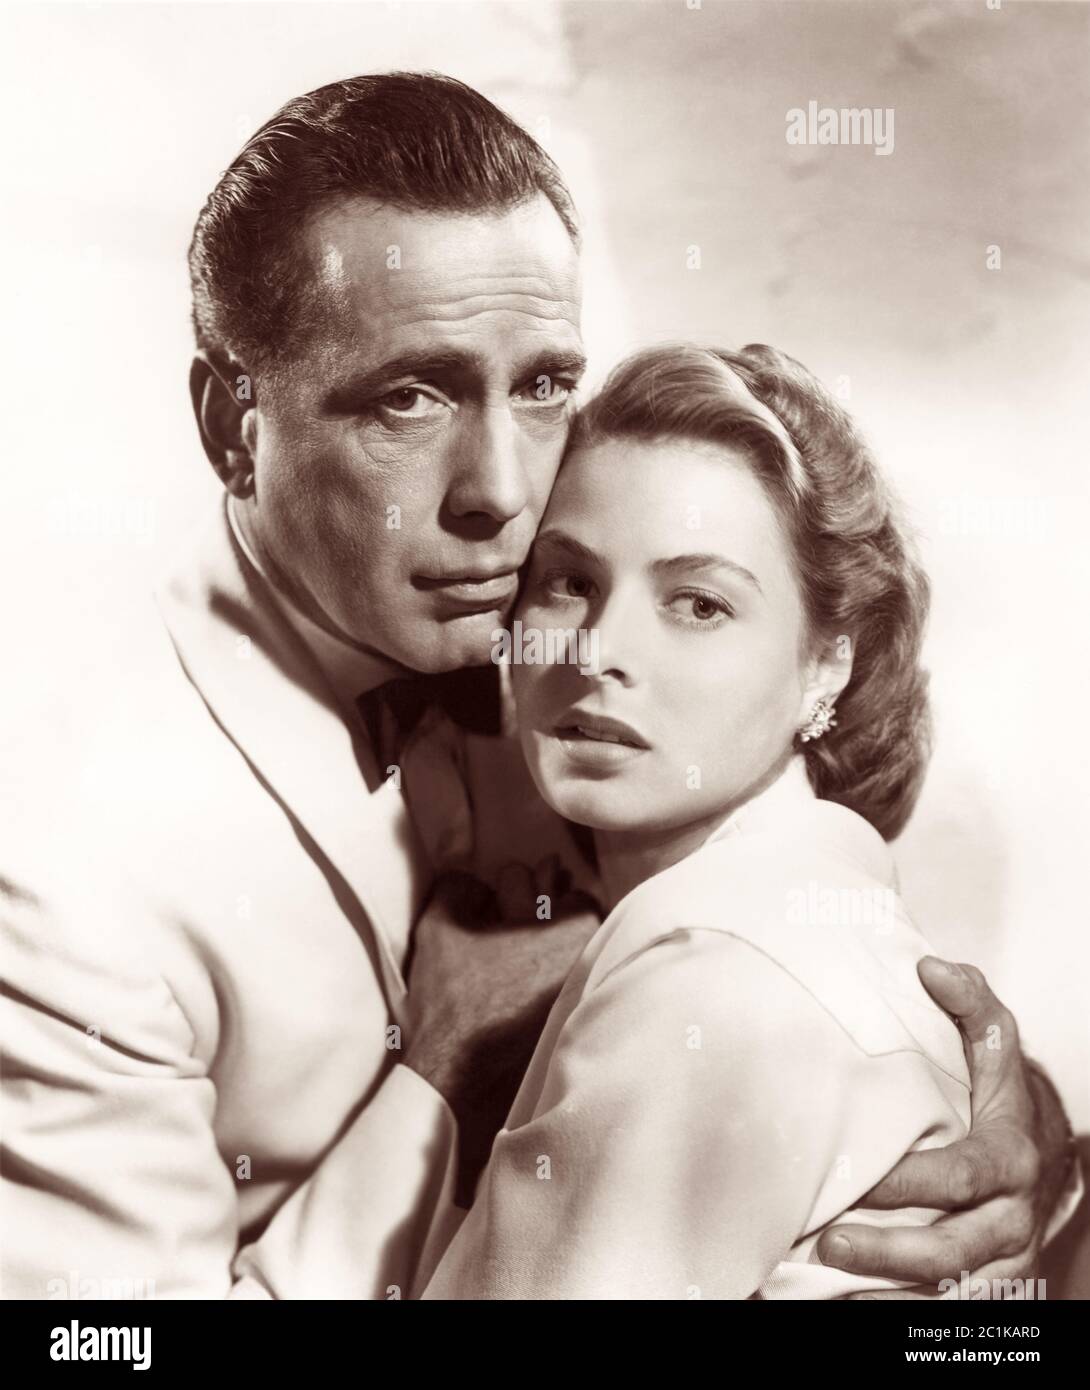 Les stars de cinéma Humphrey Bogart et Ingrid Bergman du film classique de 1942, Casablanca. Banque D'Images